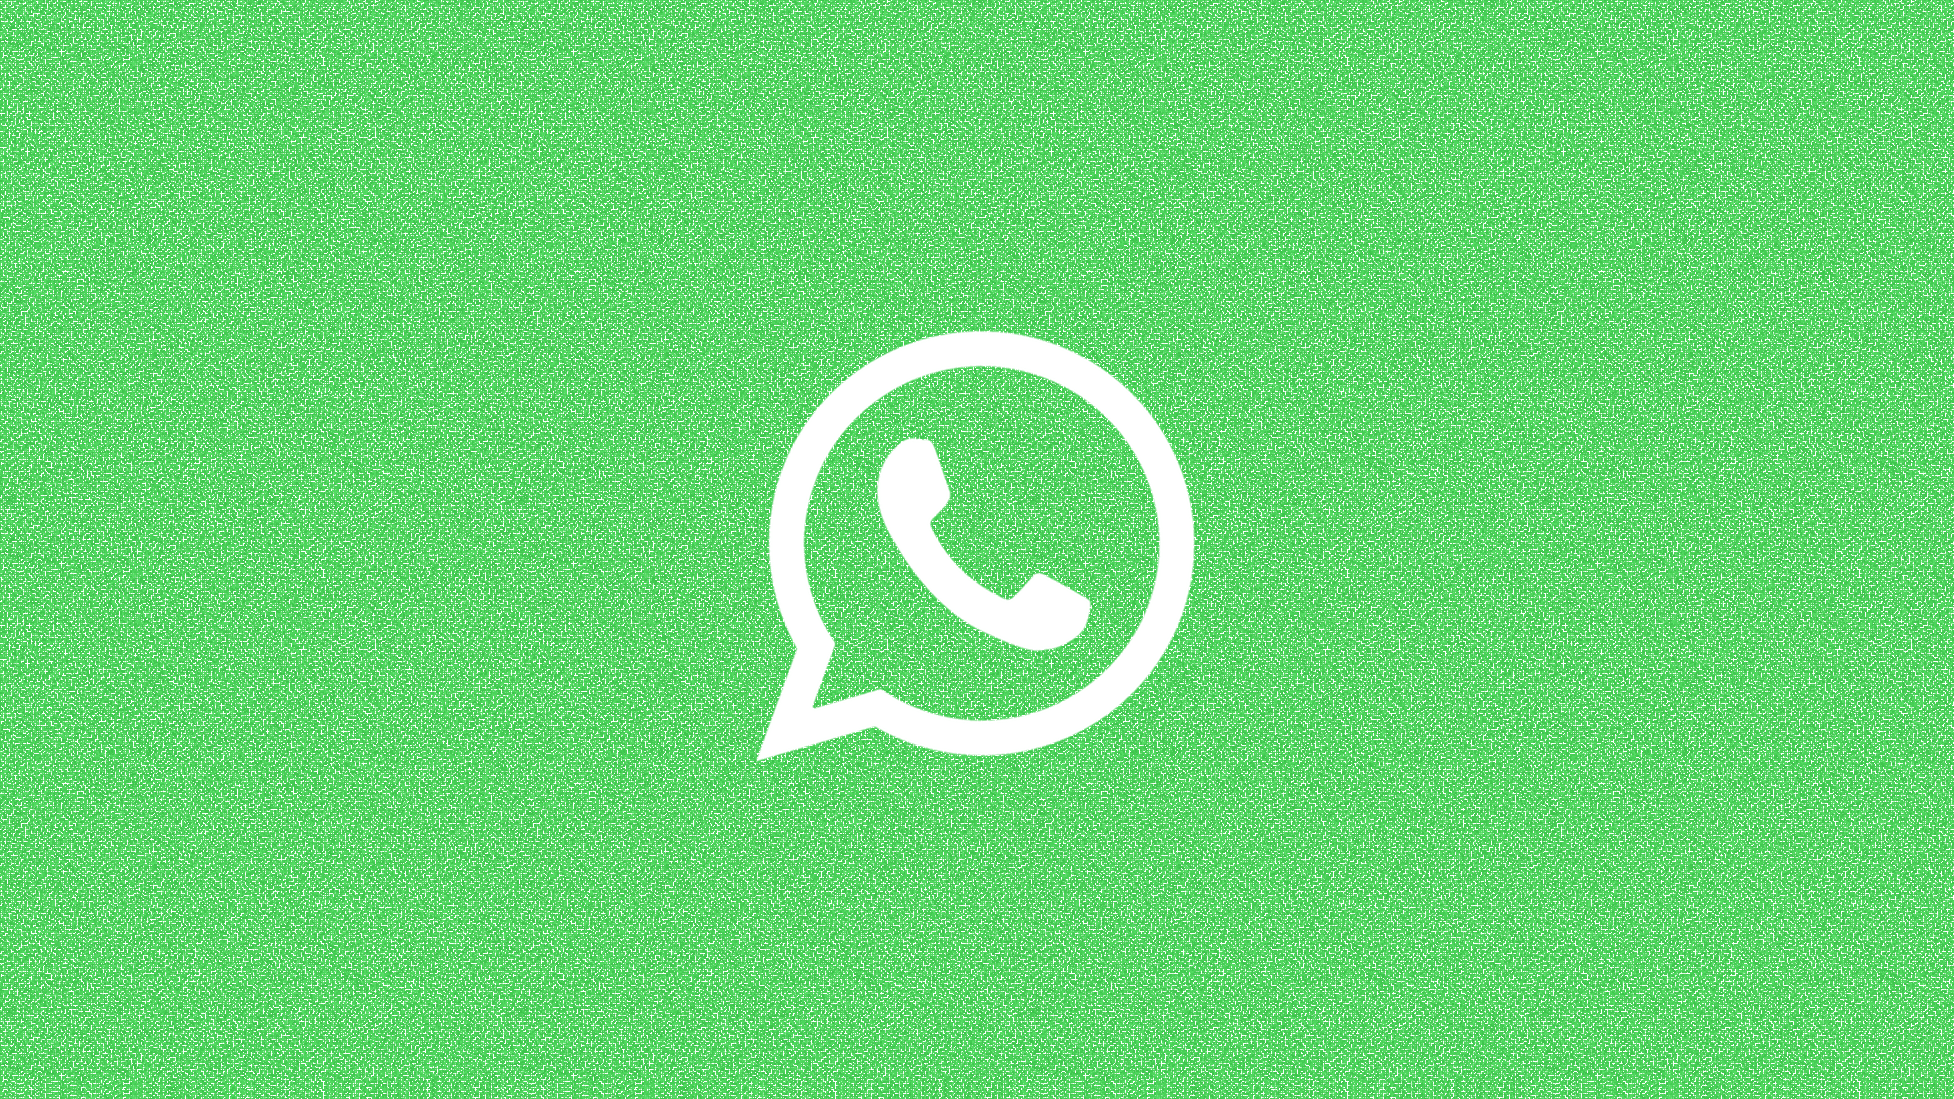 App Store 5 نوفمبر 2020 يبدأ تطبيق WhatsApp في طرح إحدى الوظائف الأكثر مناقشة